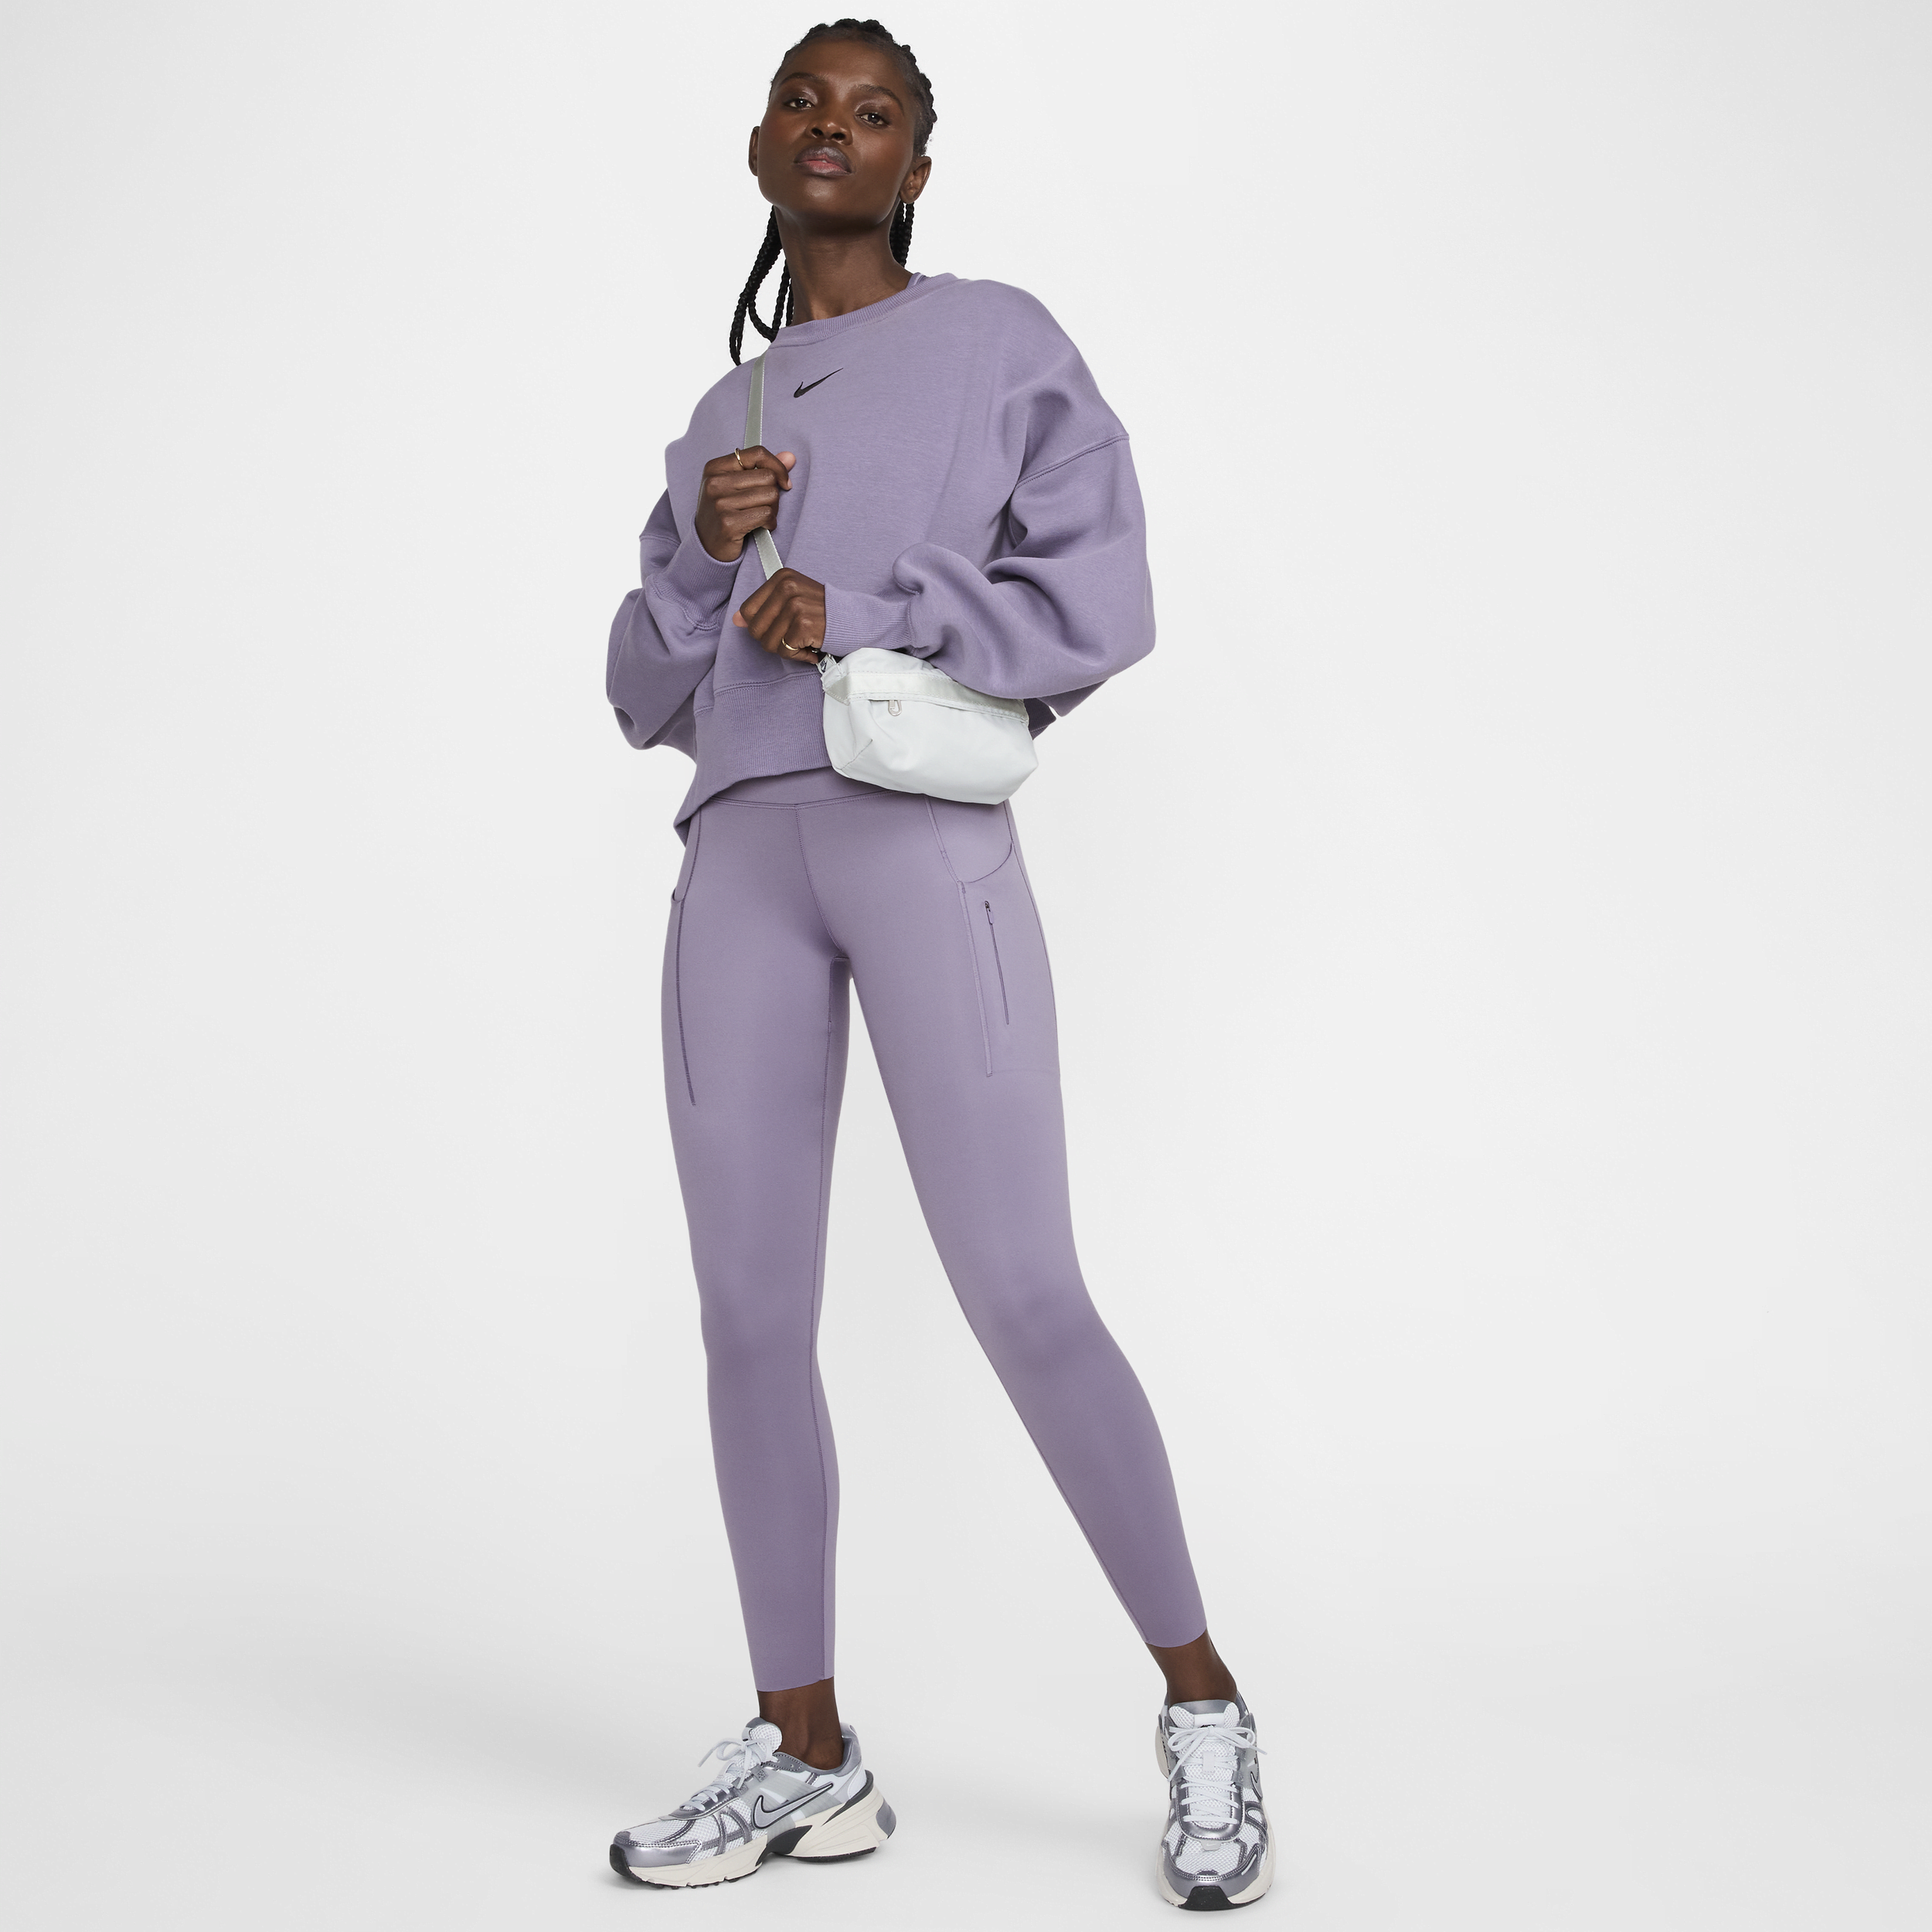 Nike Go-7/8-leggings med højt støtteniveau, mellemhøj talje og lommer til kvinder - lilla